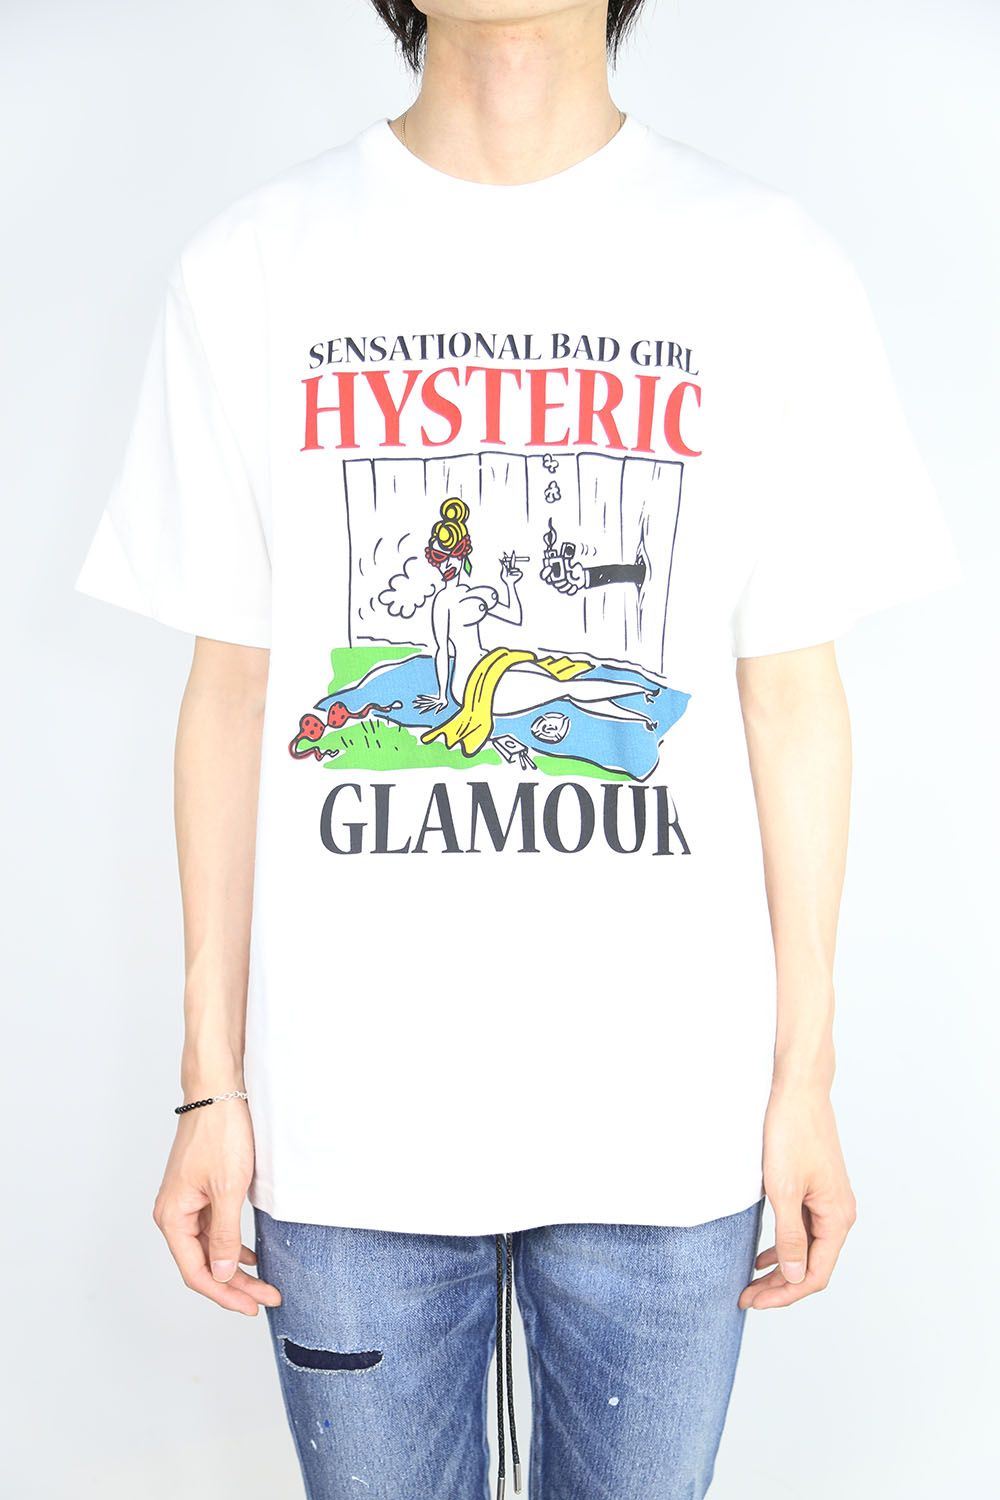 MISS HYSTERIC GARDEN Tシャツ / ホワイト - S